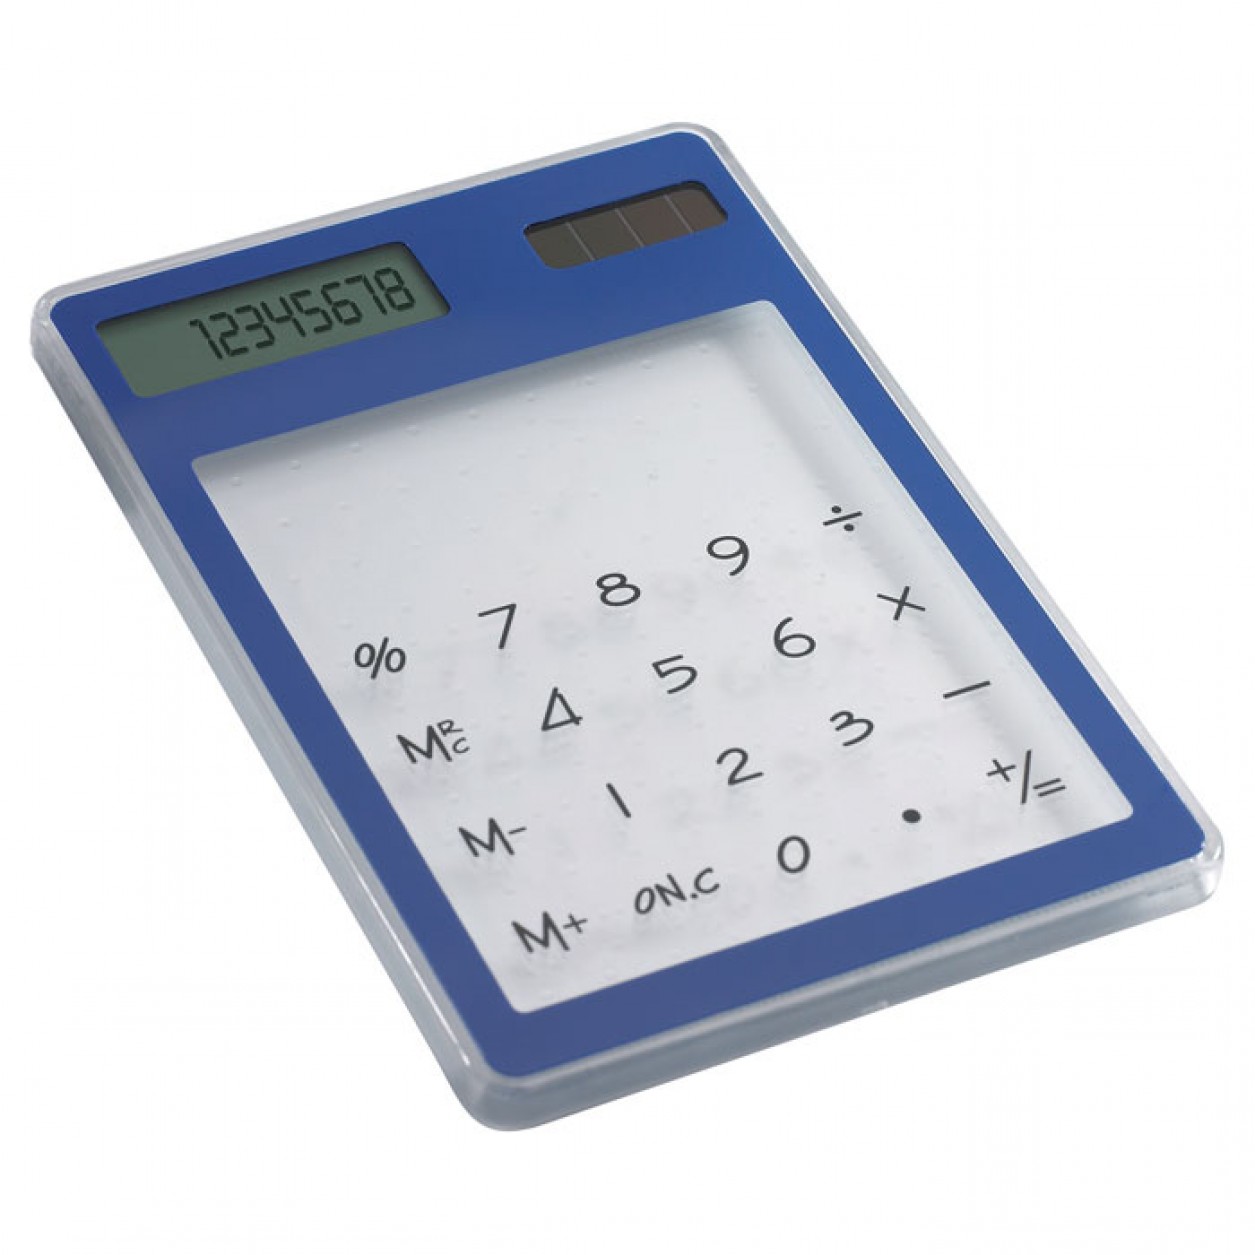 OS-0132 transparentni solarni kalkulatori